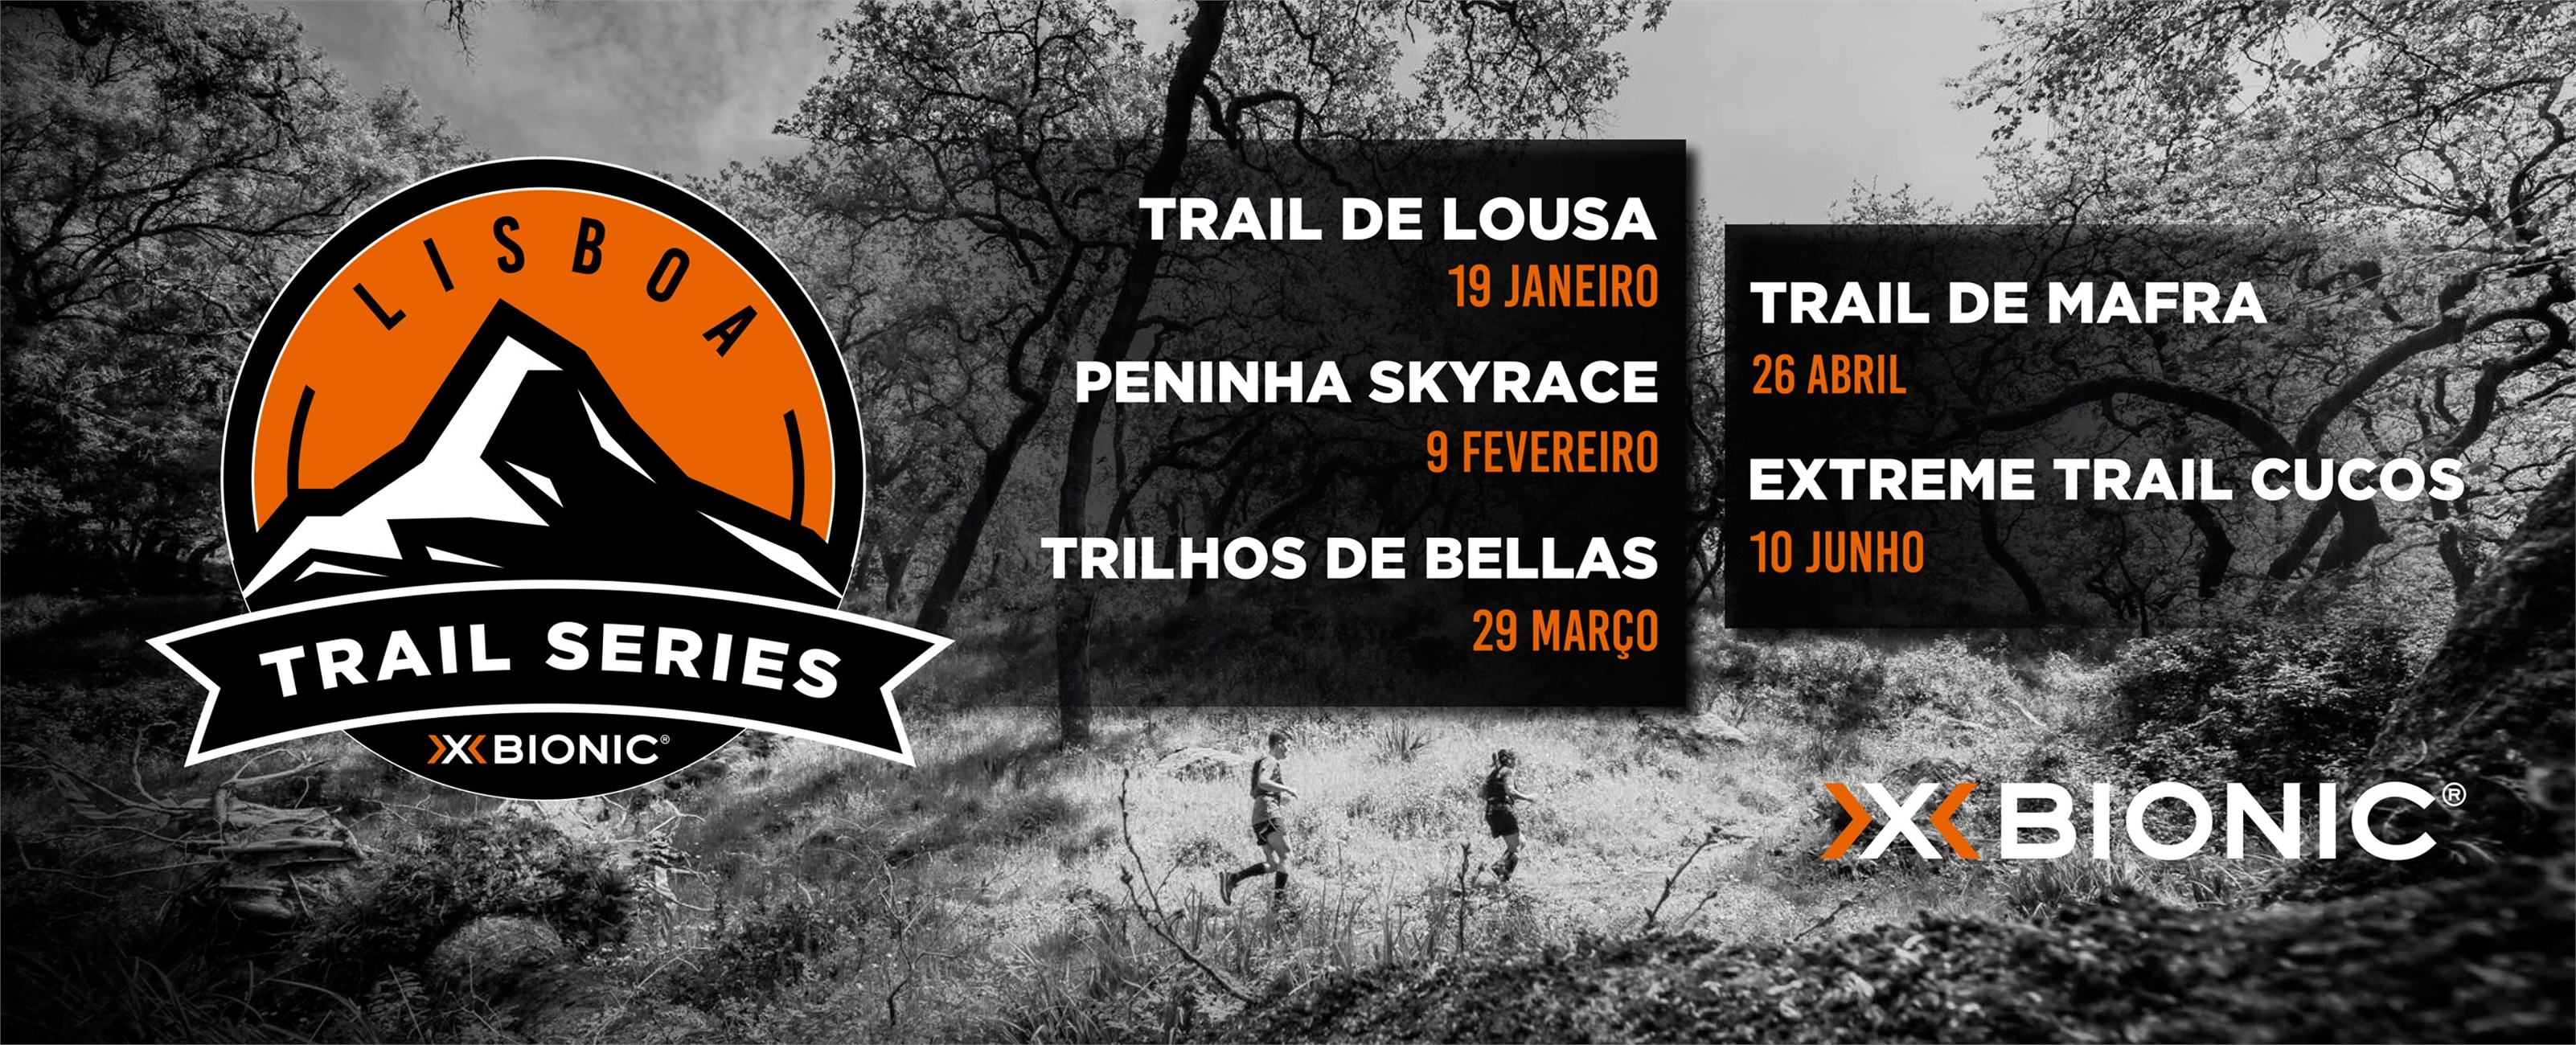  X-bionic Lisboa Trail Series 2020 - Circuitos - TurresEvents